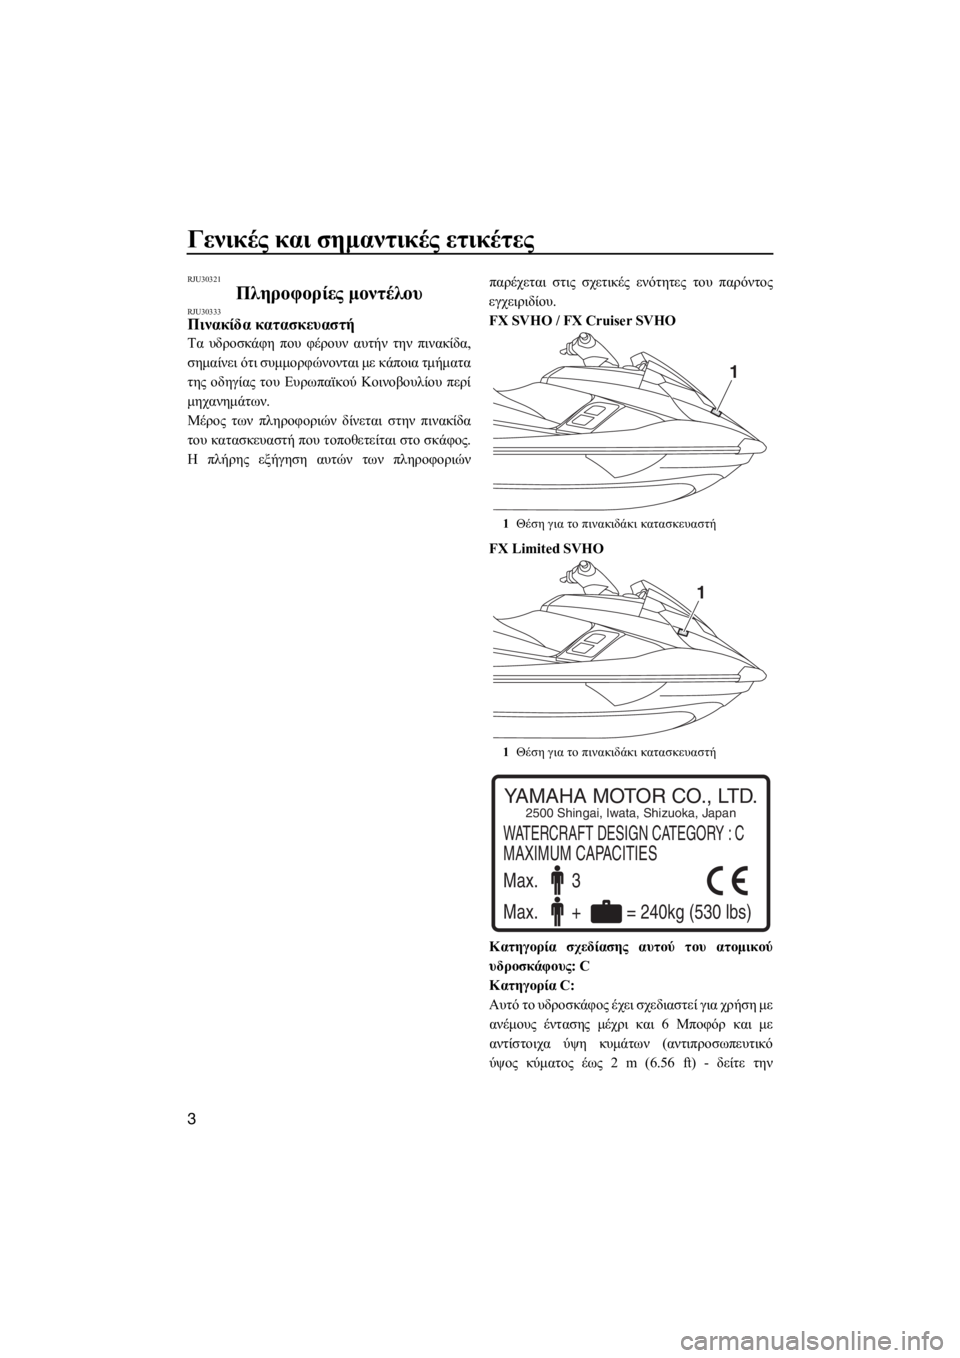 YAMAHA FX SVHO 2017  ΟΔΗΓΌΣ ΧΡΉΣΗΣ (in Greek) Γενικές και σημαντικές ετικέτες
3
RJU30321
Πληροφορίες μοντέλουRJU30333Πινακίδα κατασκευαστή
Τα υδροσκάφη που φέρο�